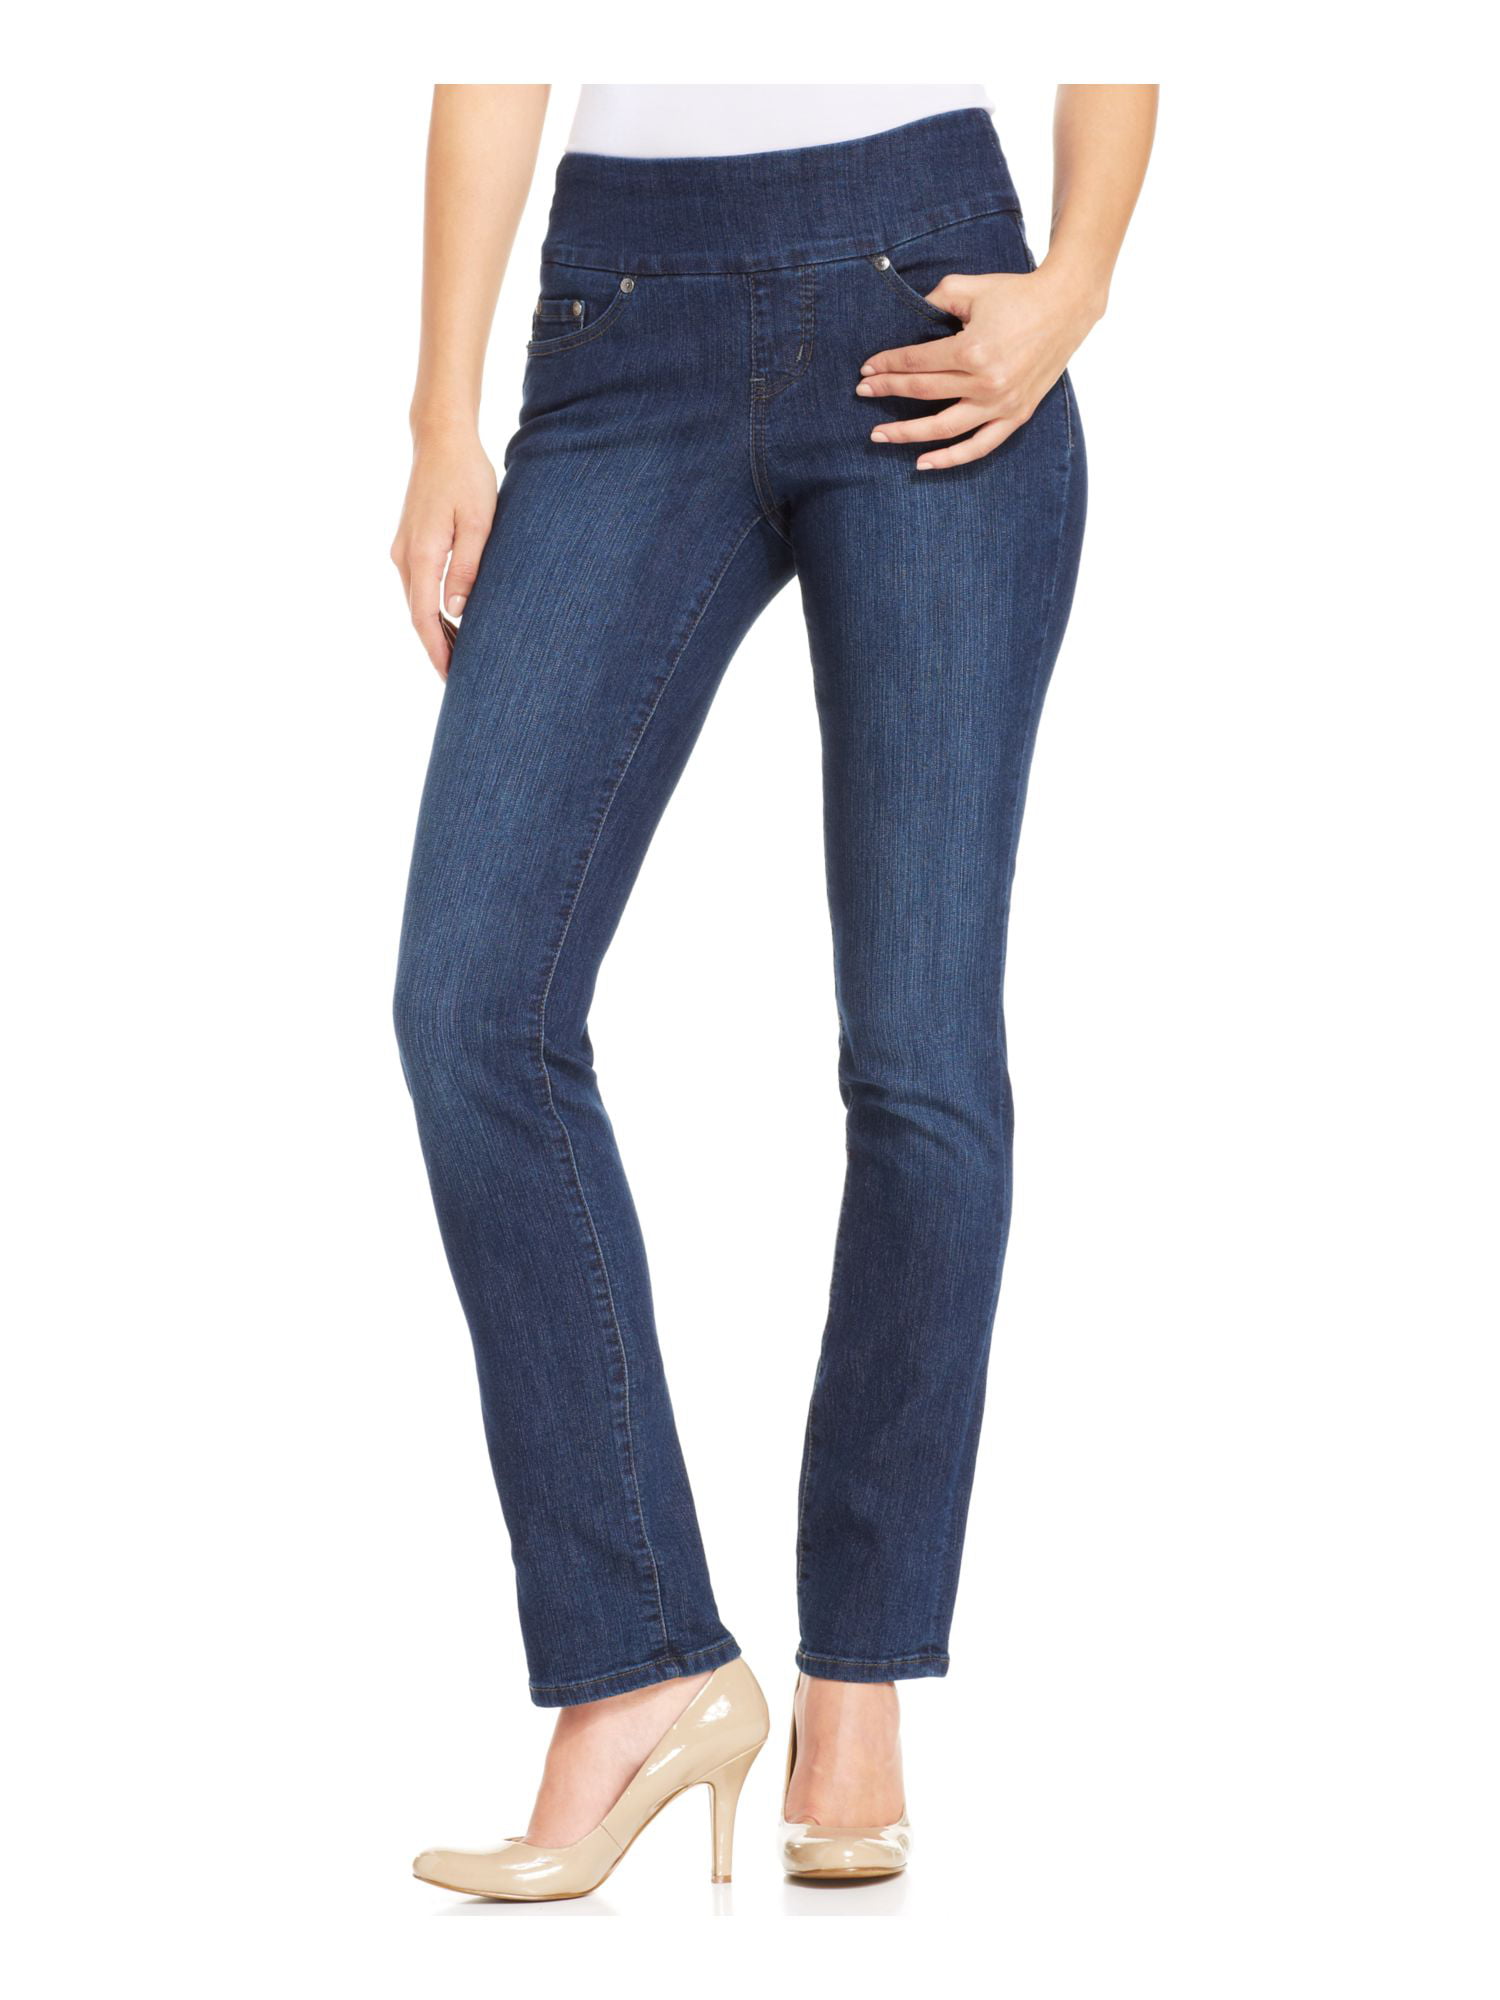 JAG Jeans - JAG Womens Blue Distressed Jeans Size: 6 - Walmart.com ...